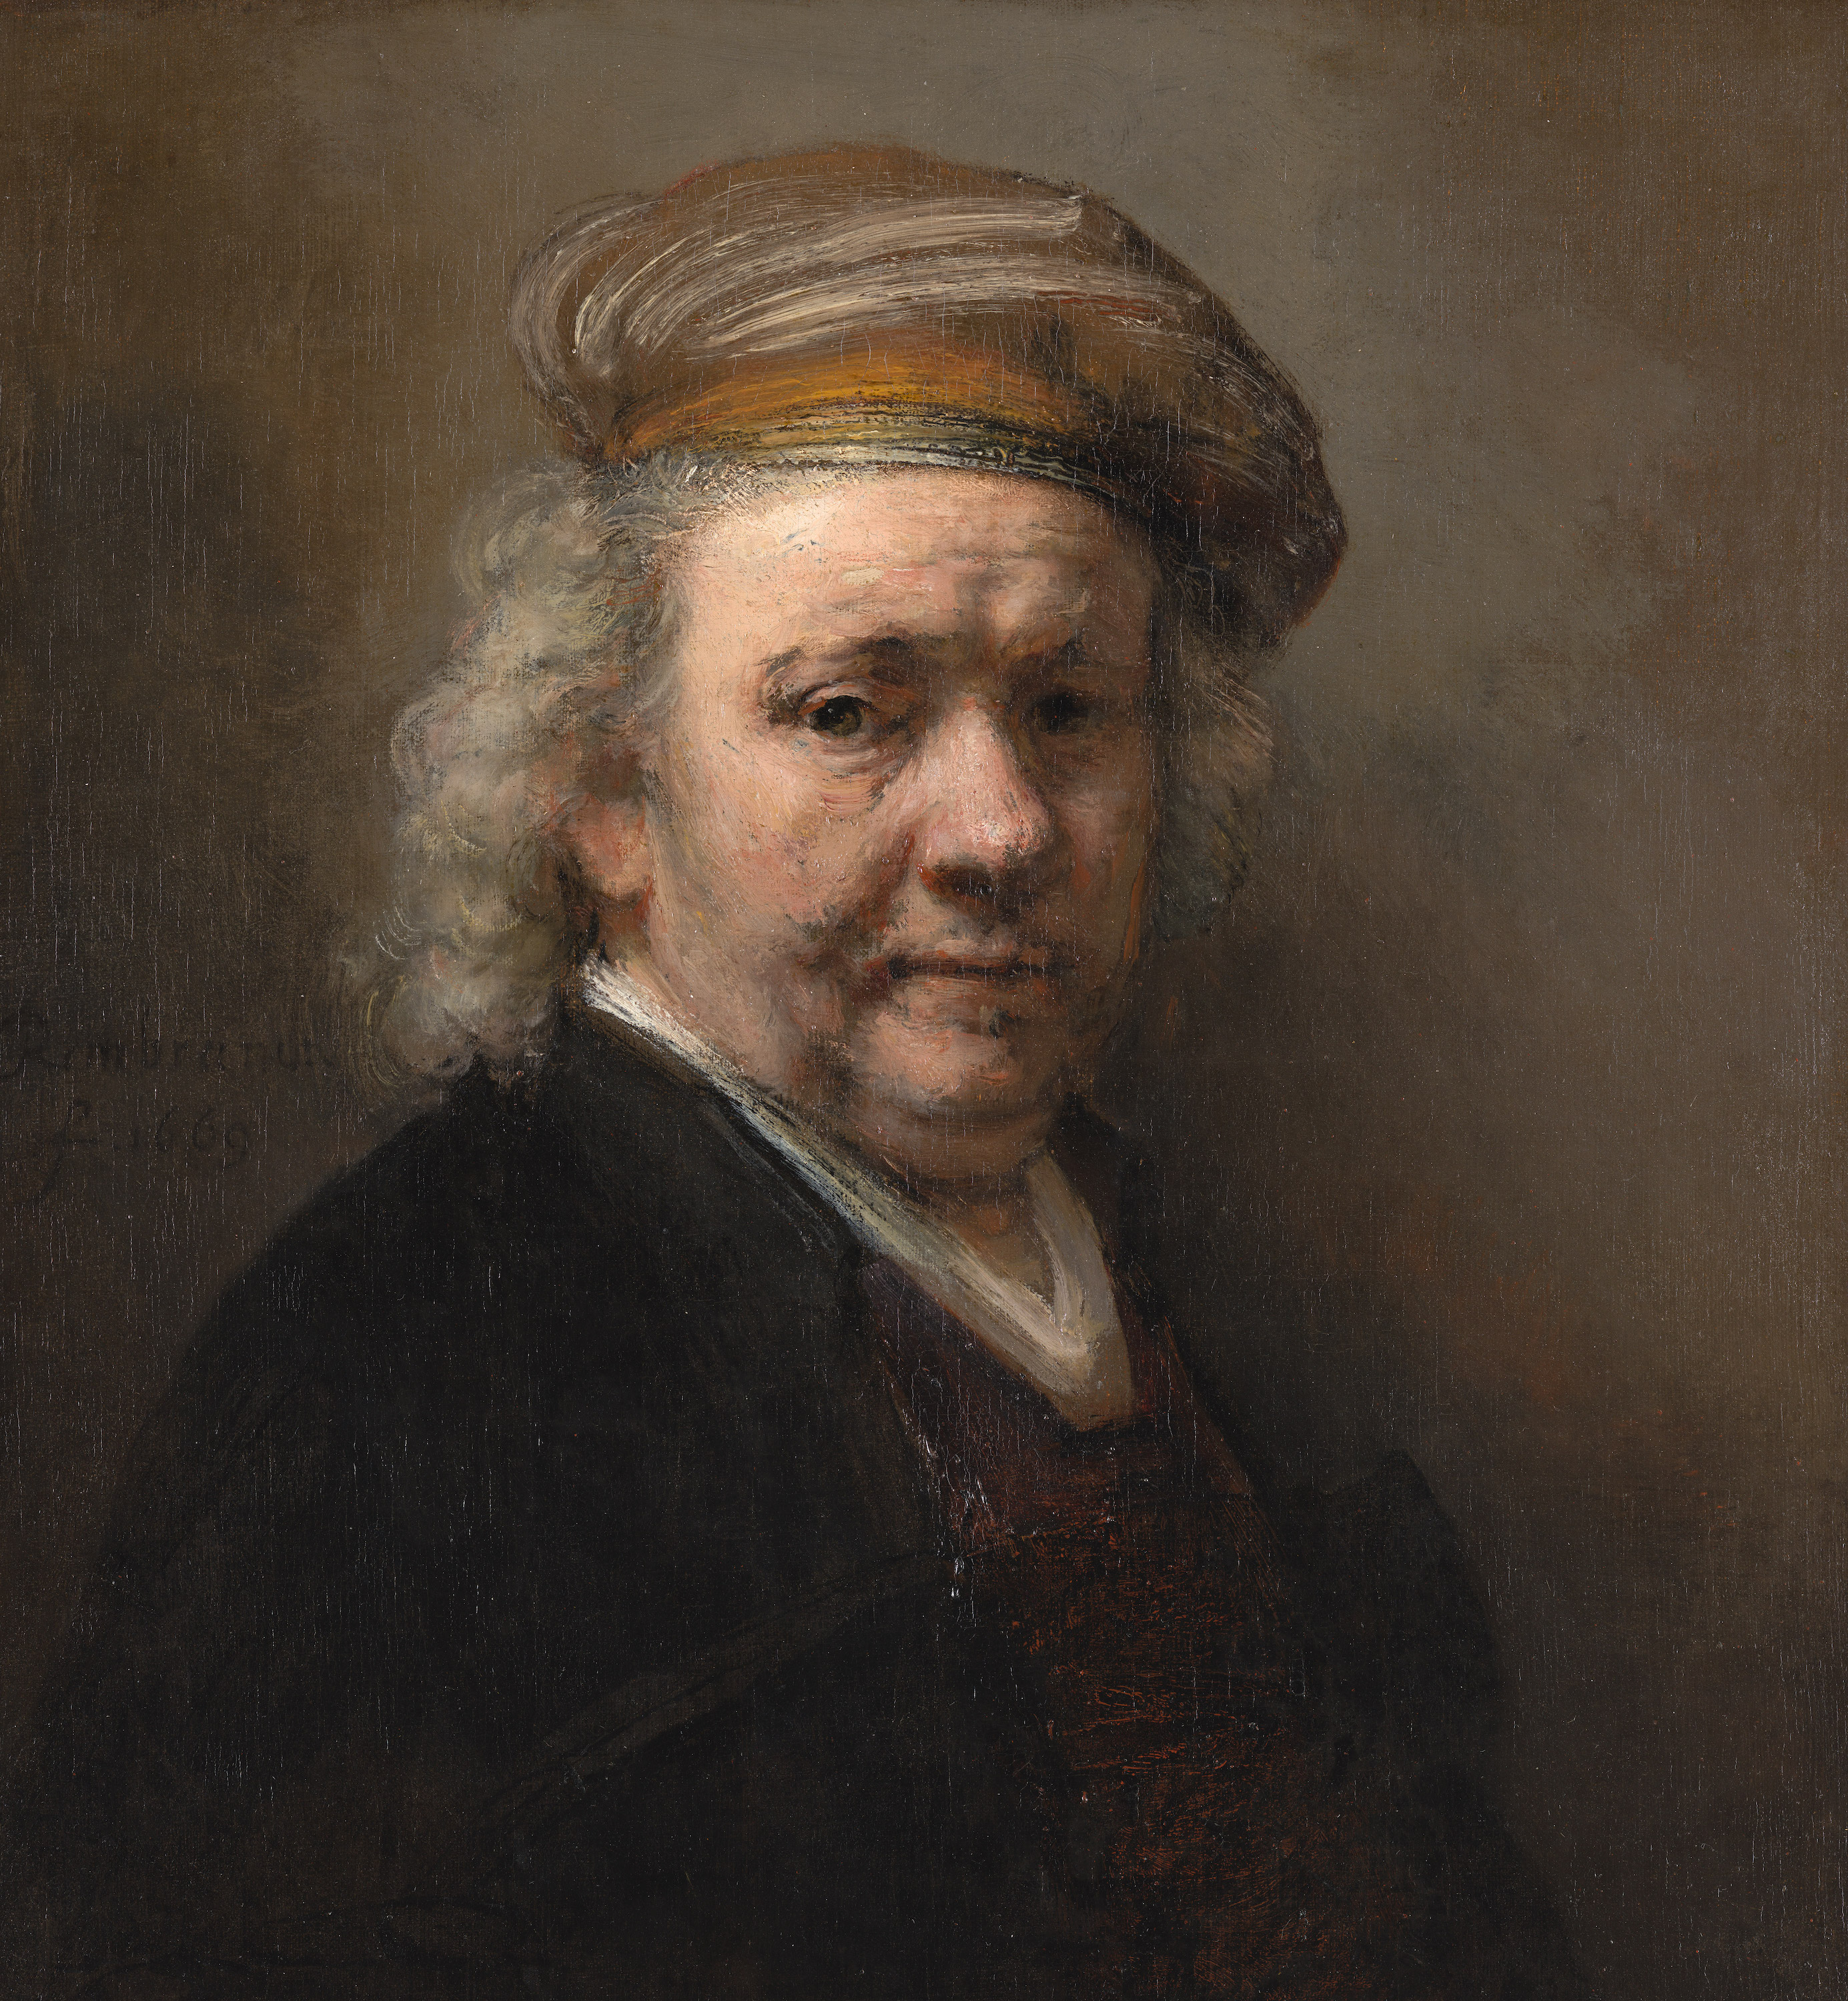 Autoportrét by Rembrandt van Rijn - 1669 - 65.4 x 60.2 cm 